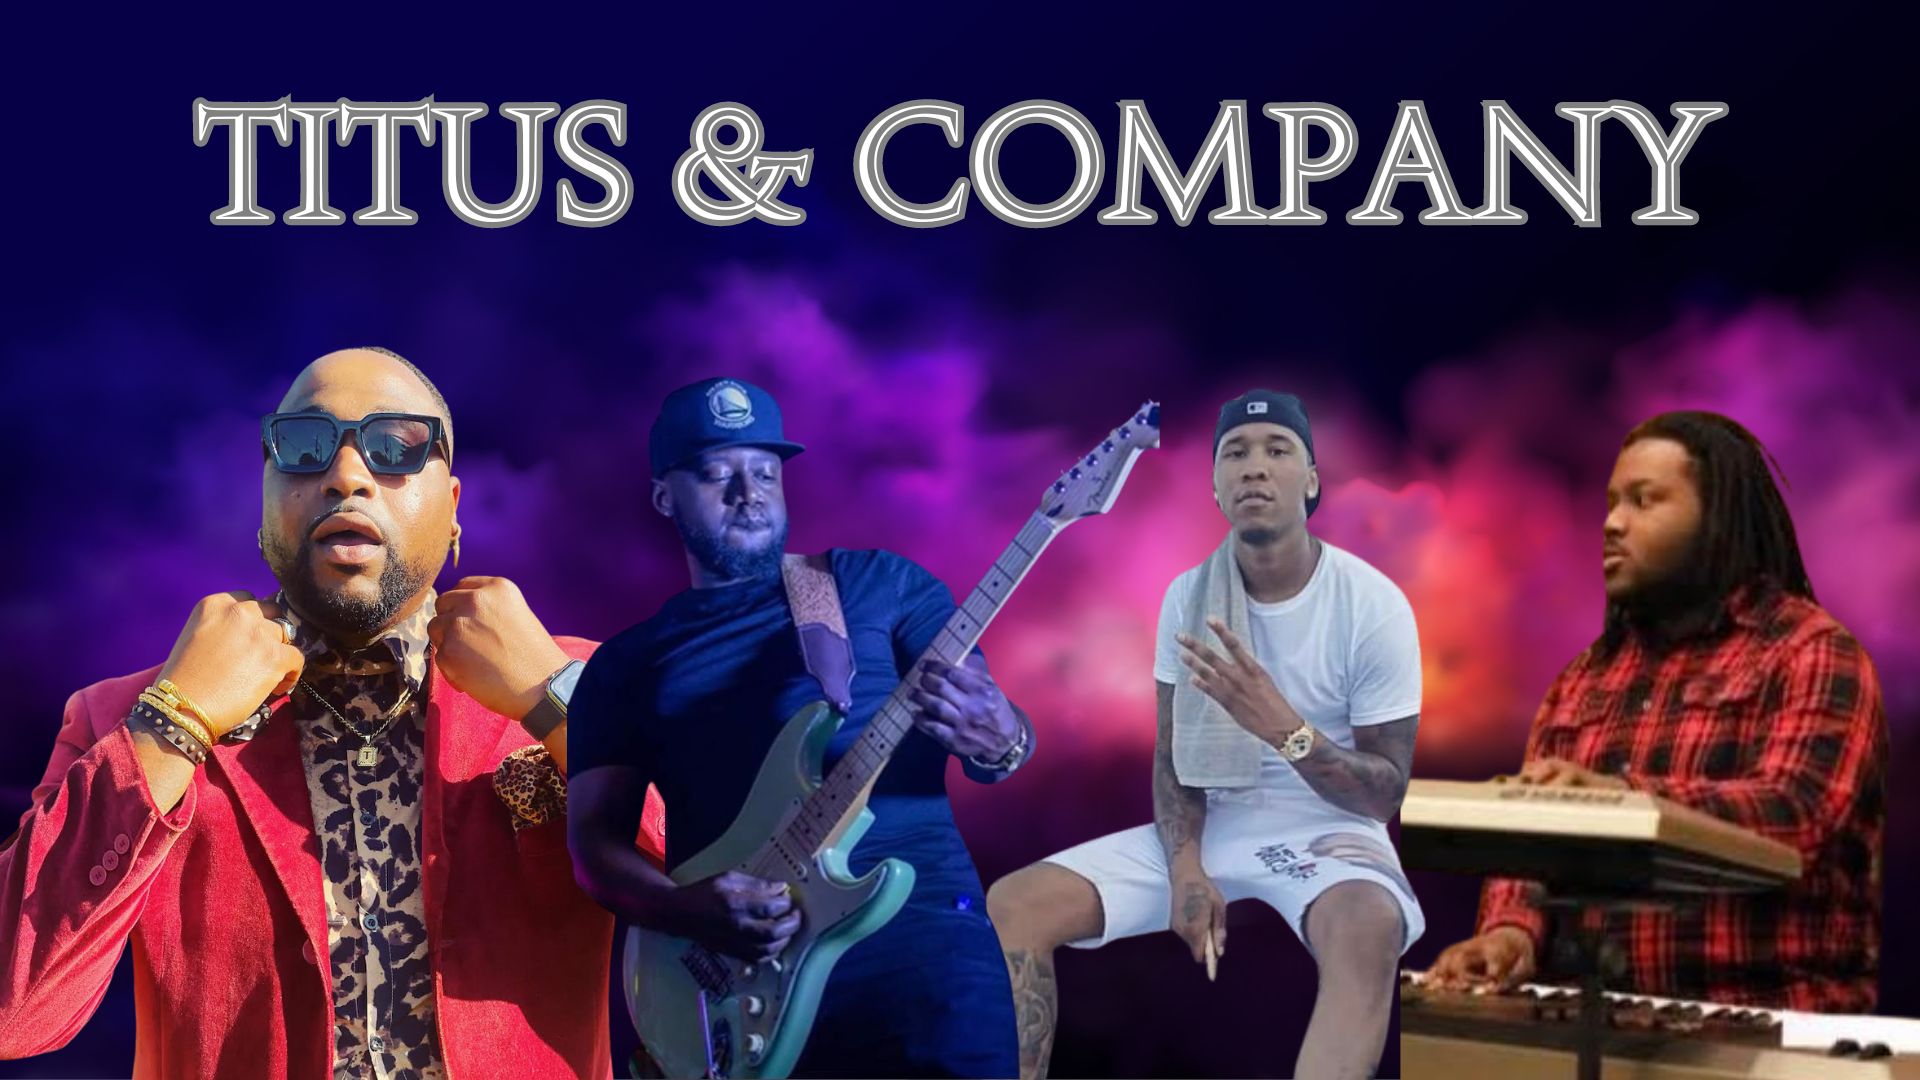 Titus & Company